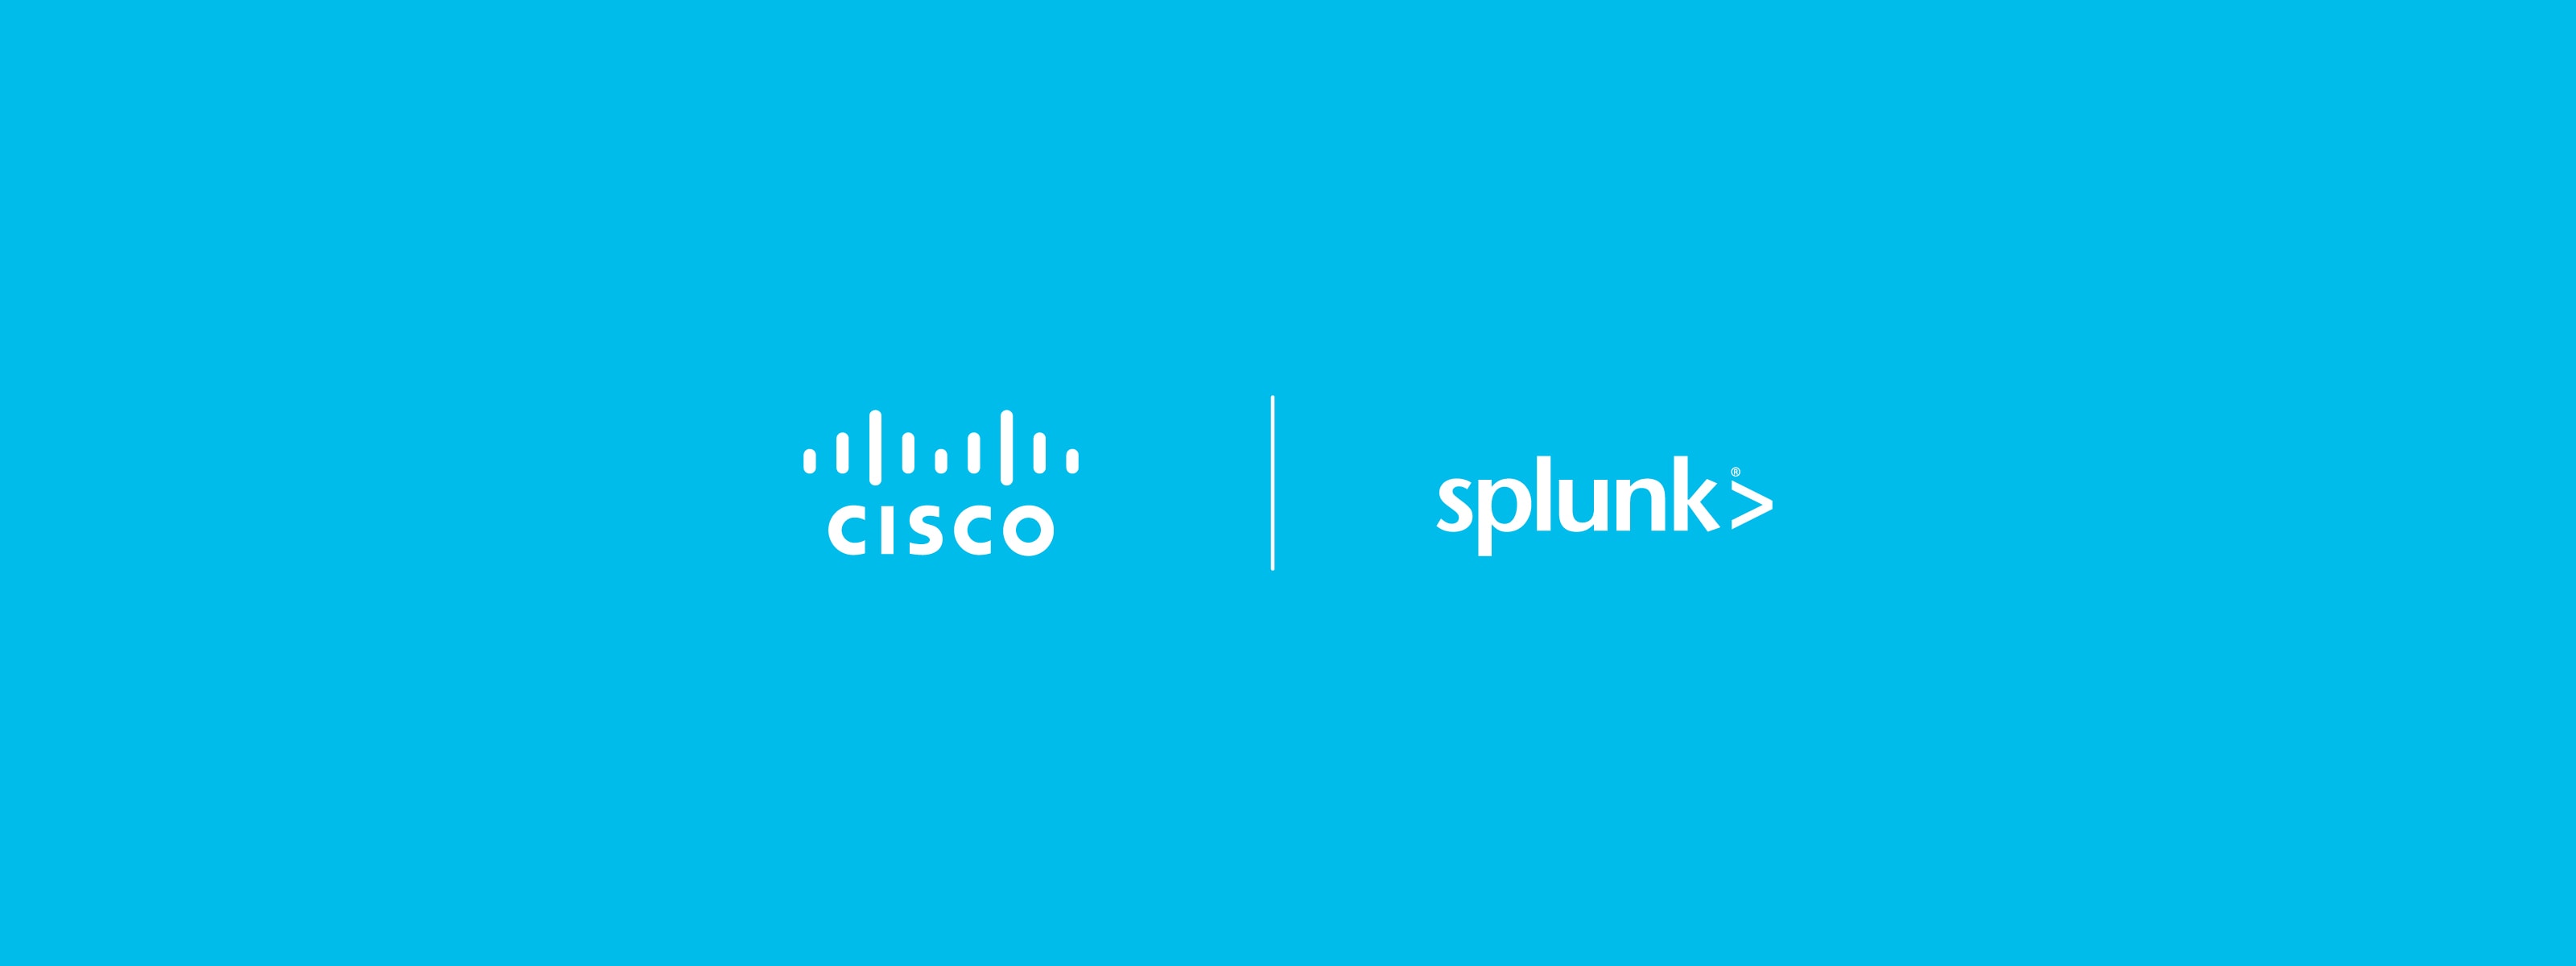 Cisco | Splunk logos